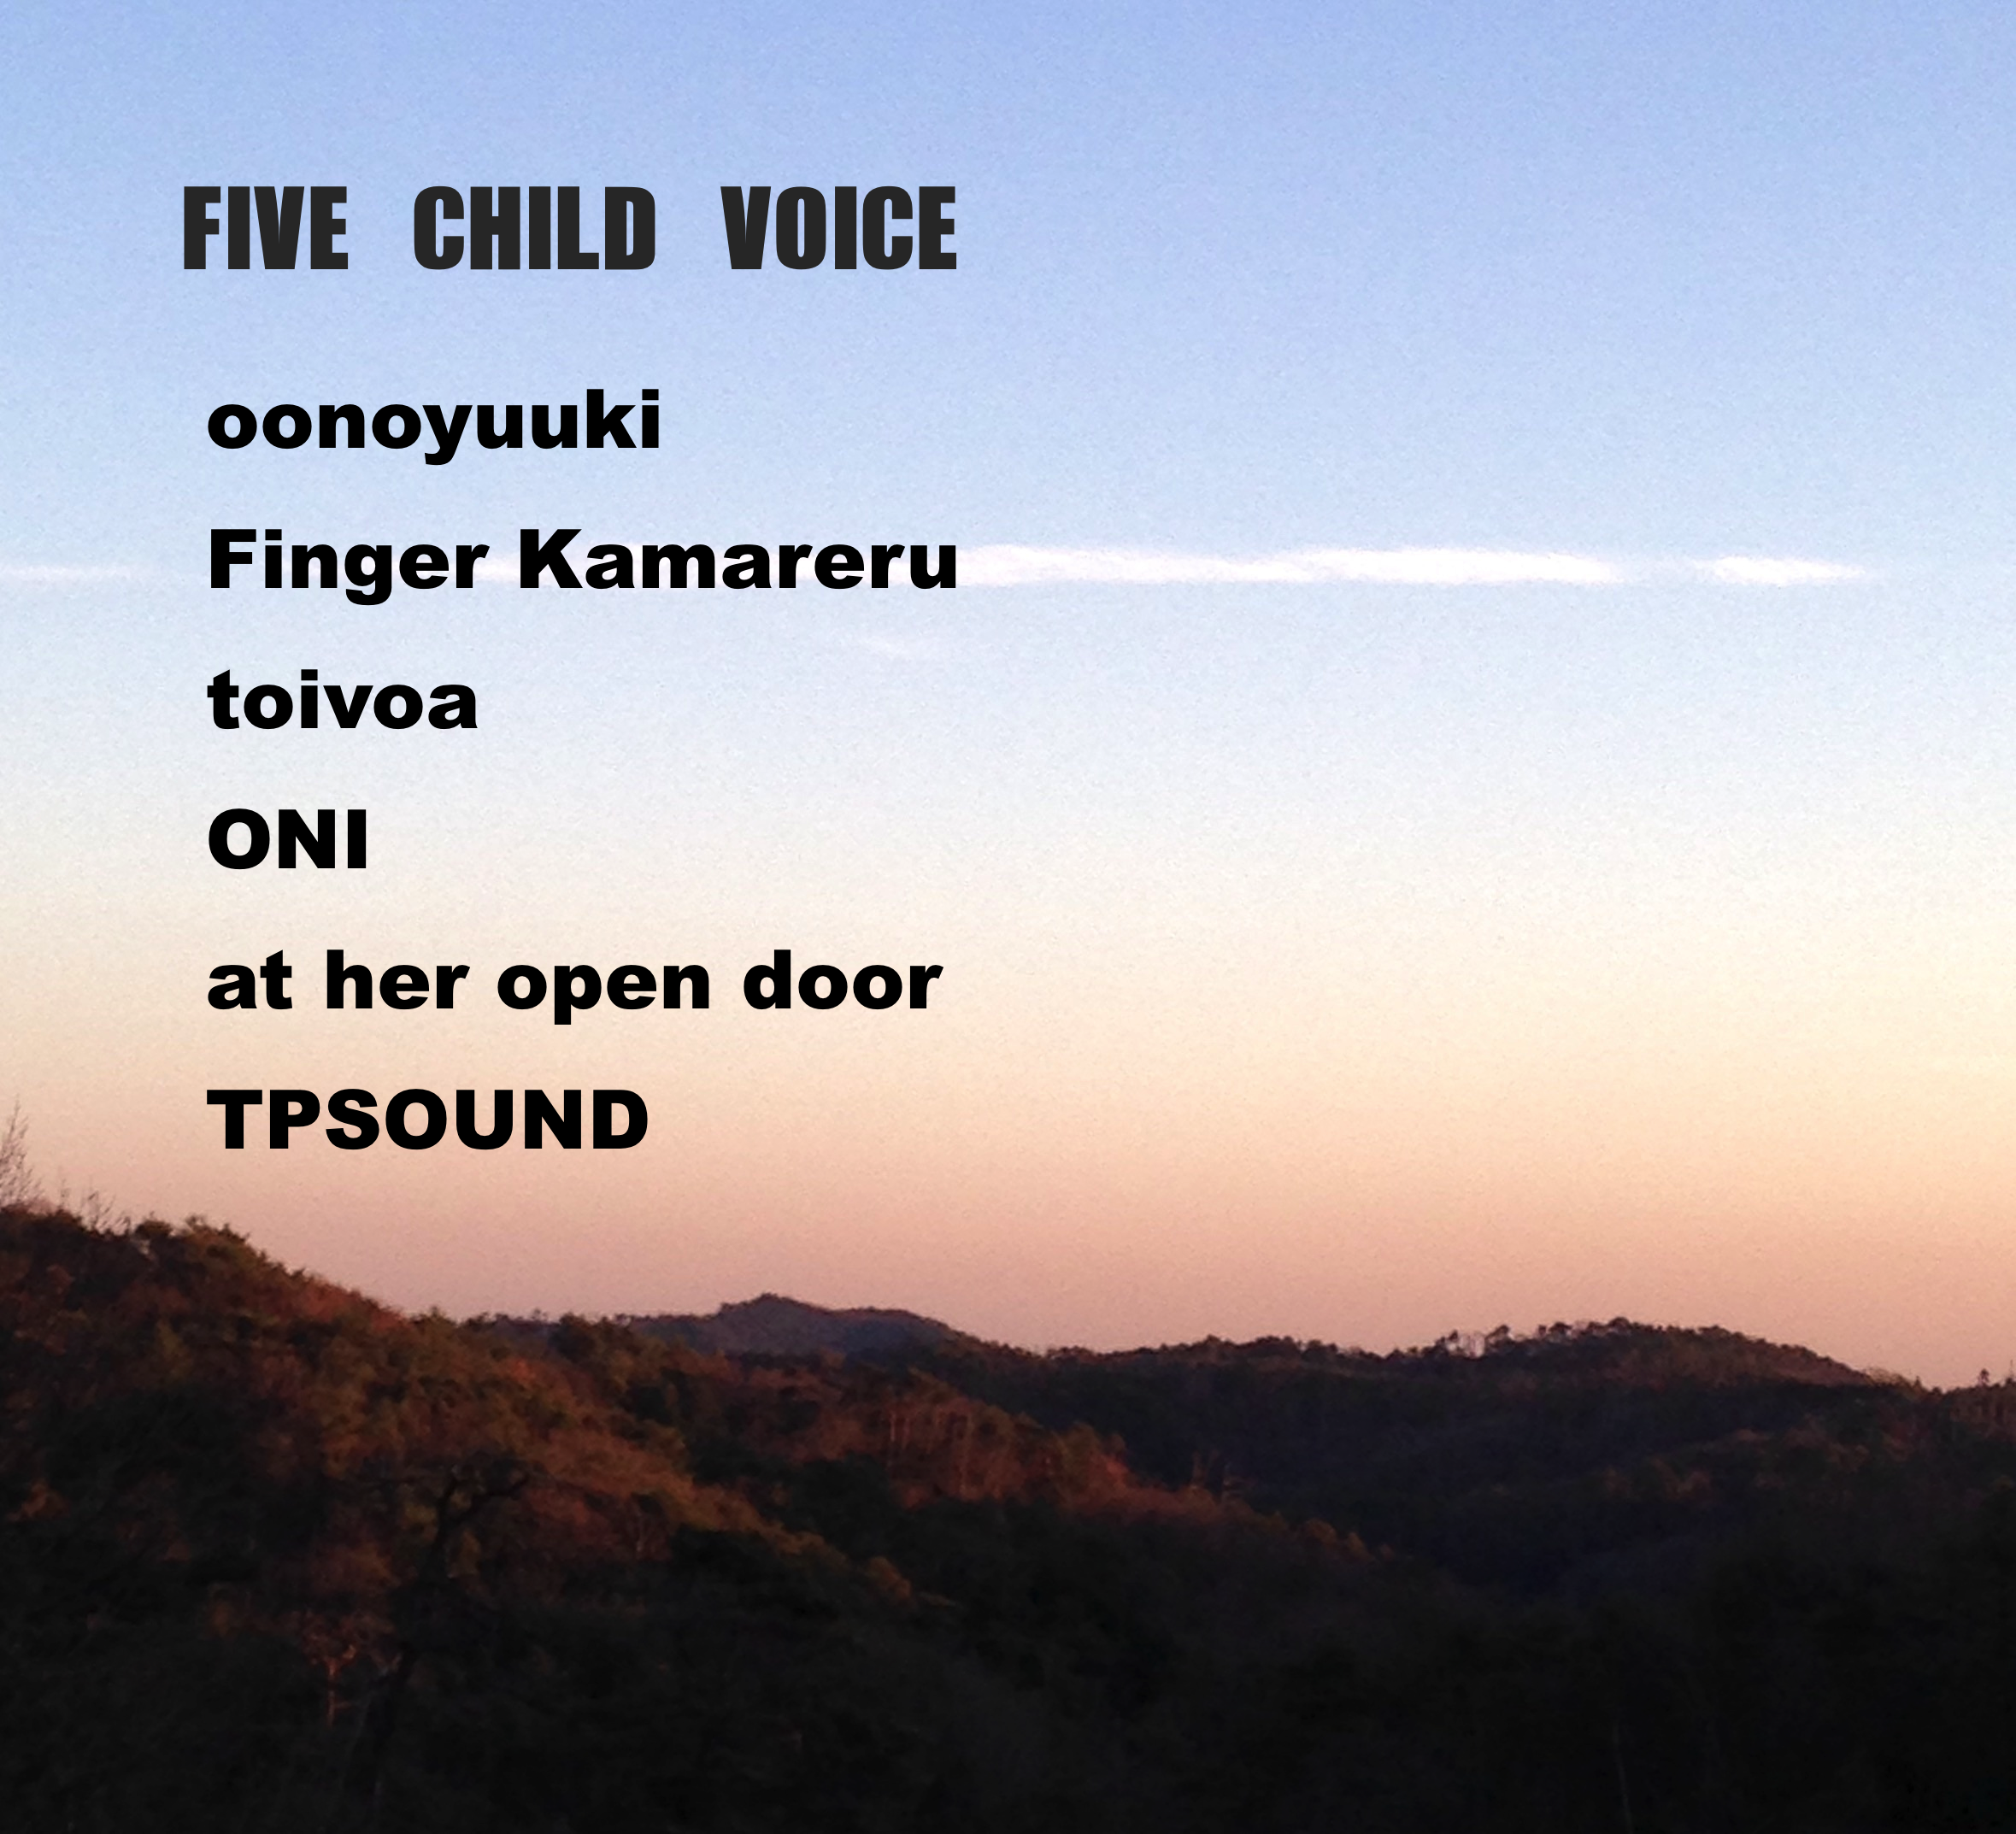 FIVE CHILD VOICE